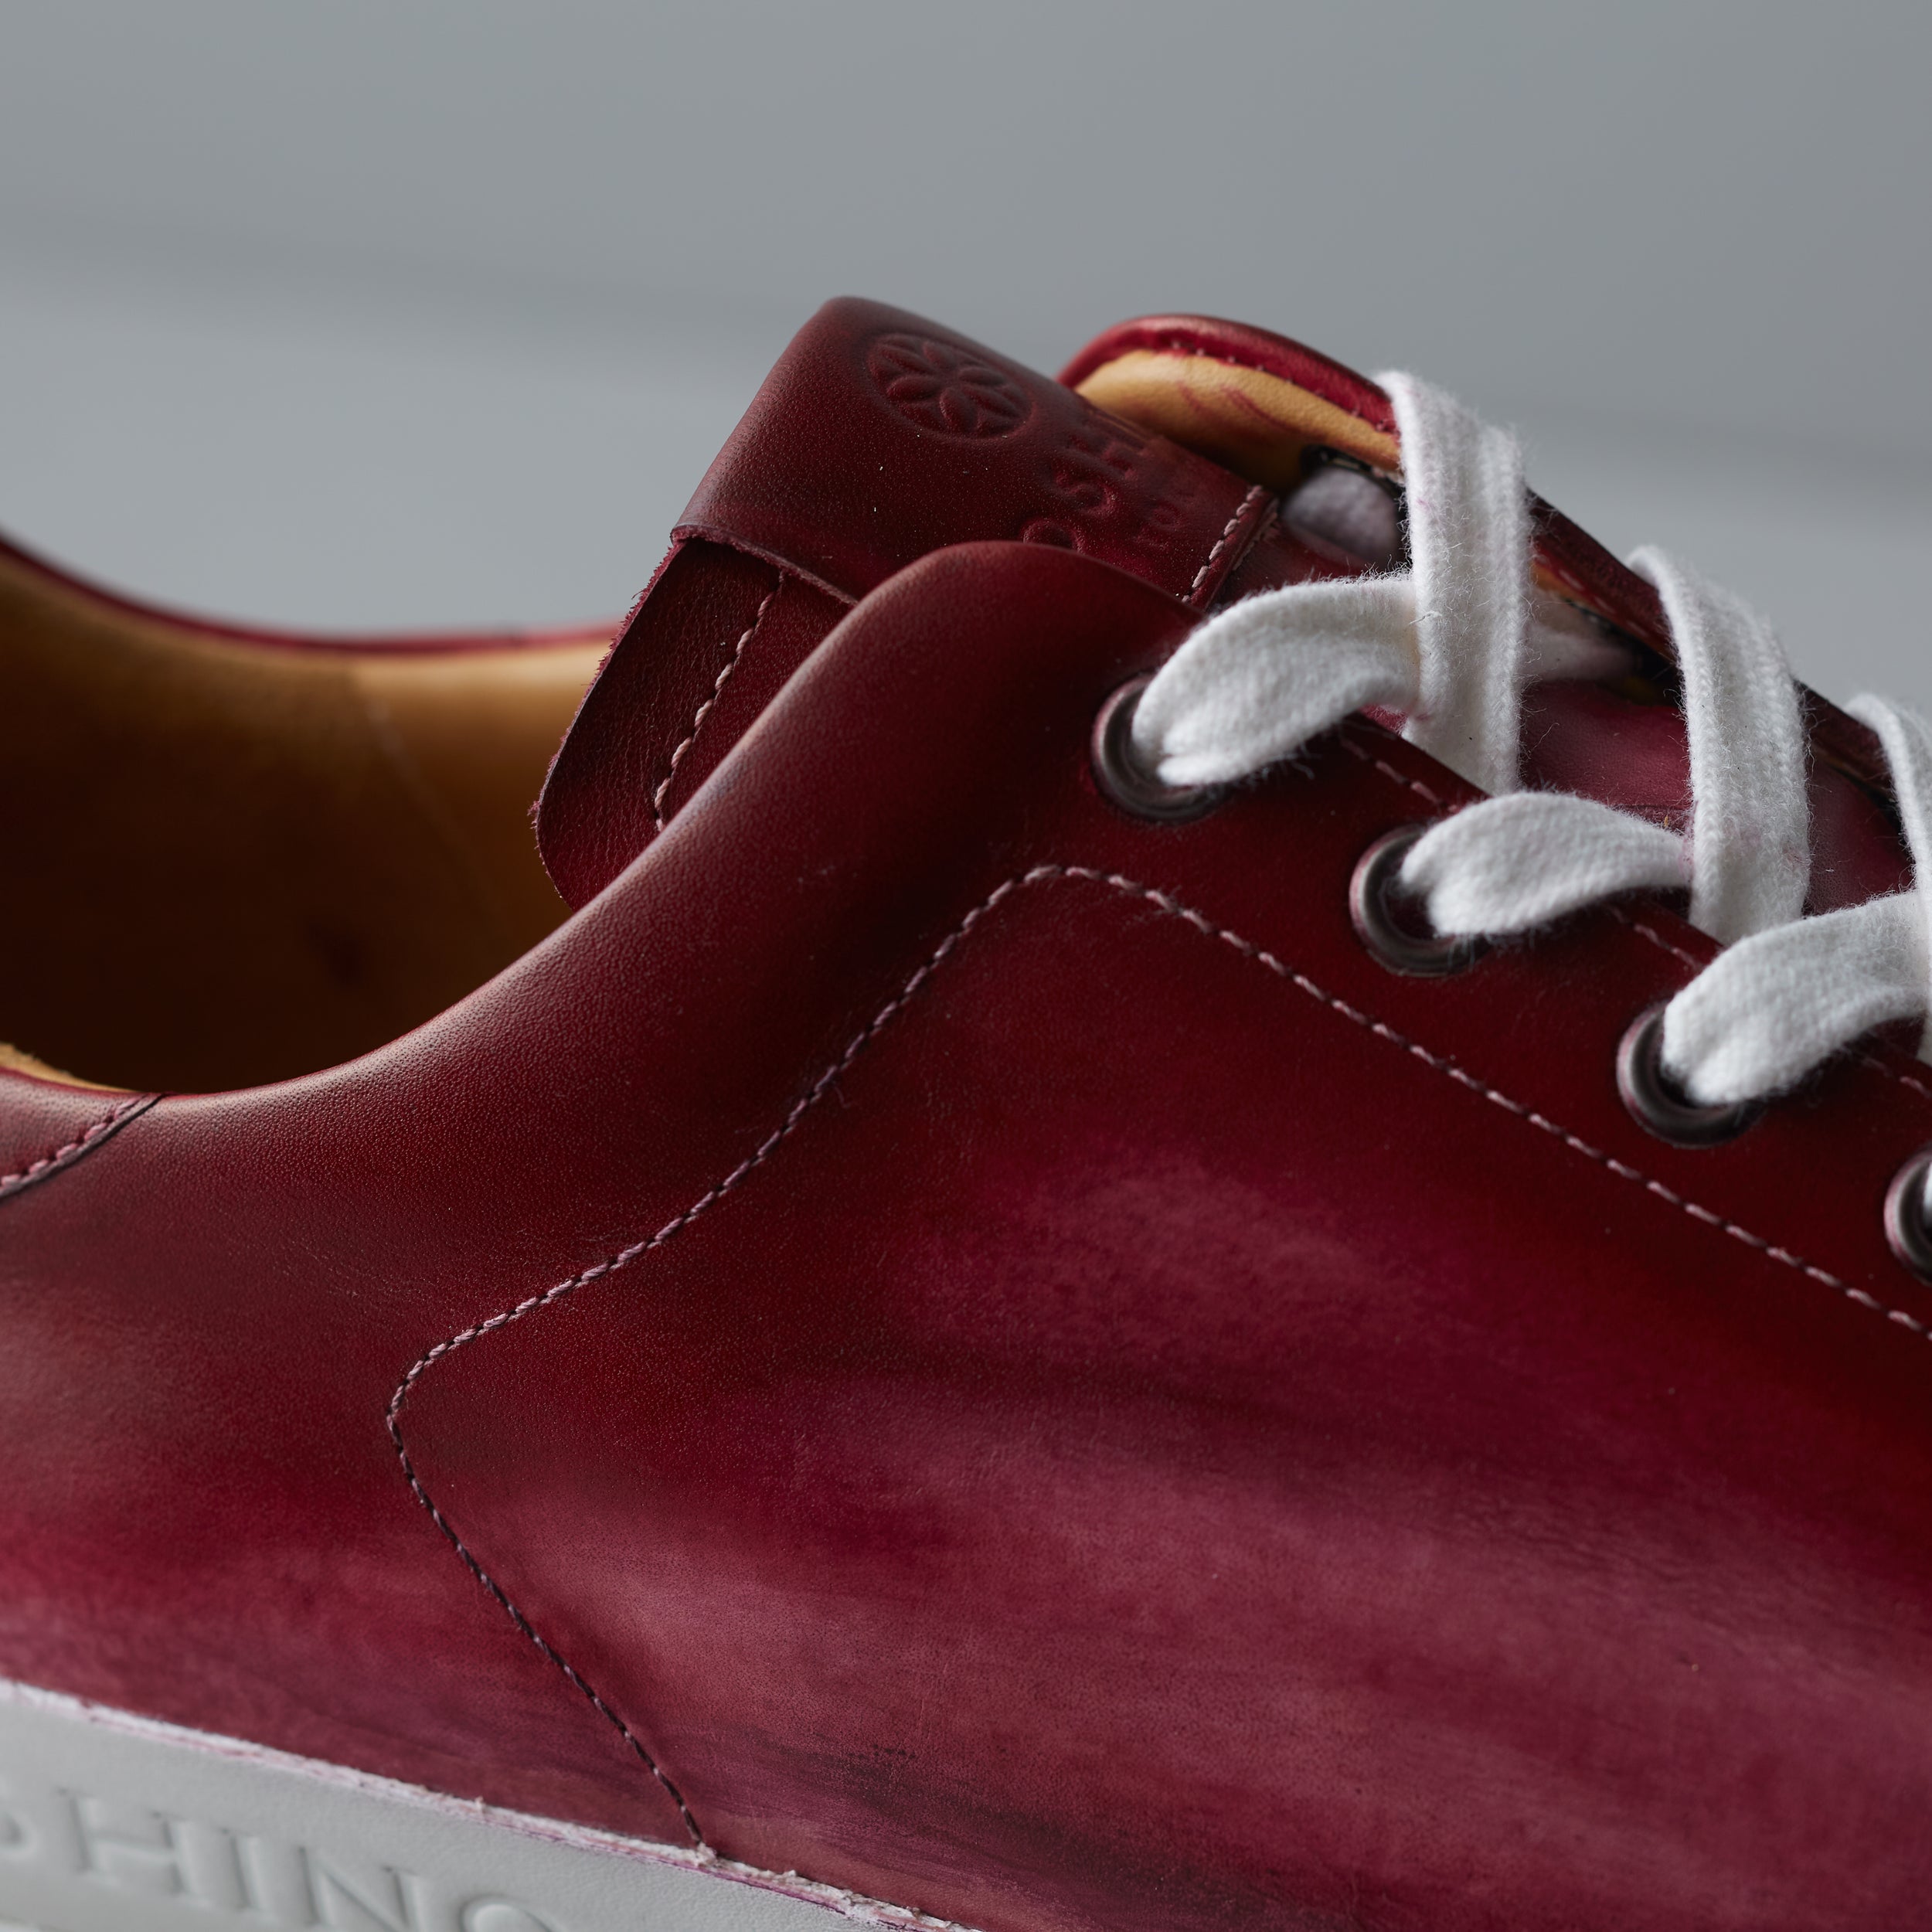 [men's] Liberte - low-top sneakers - burgundy x gray patina calfskin